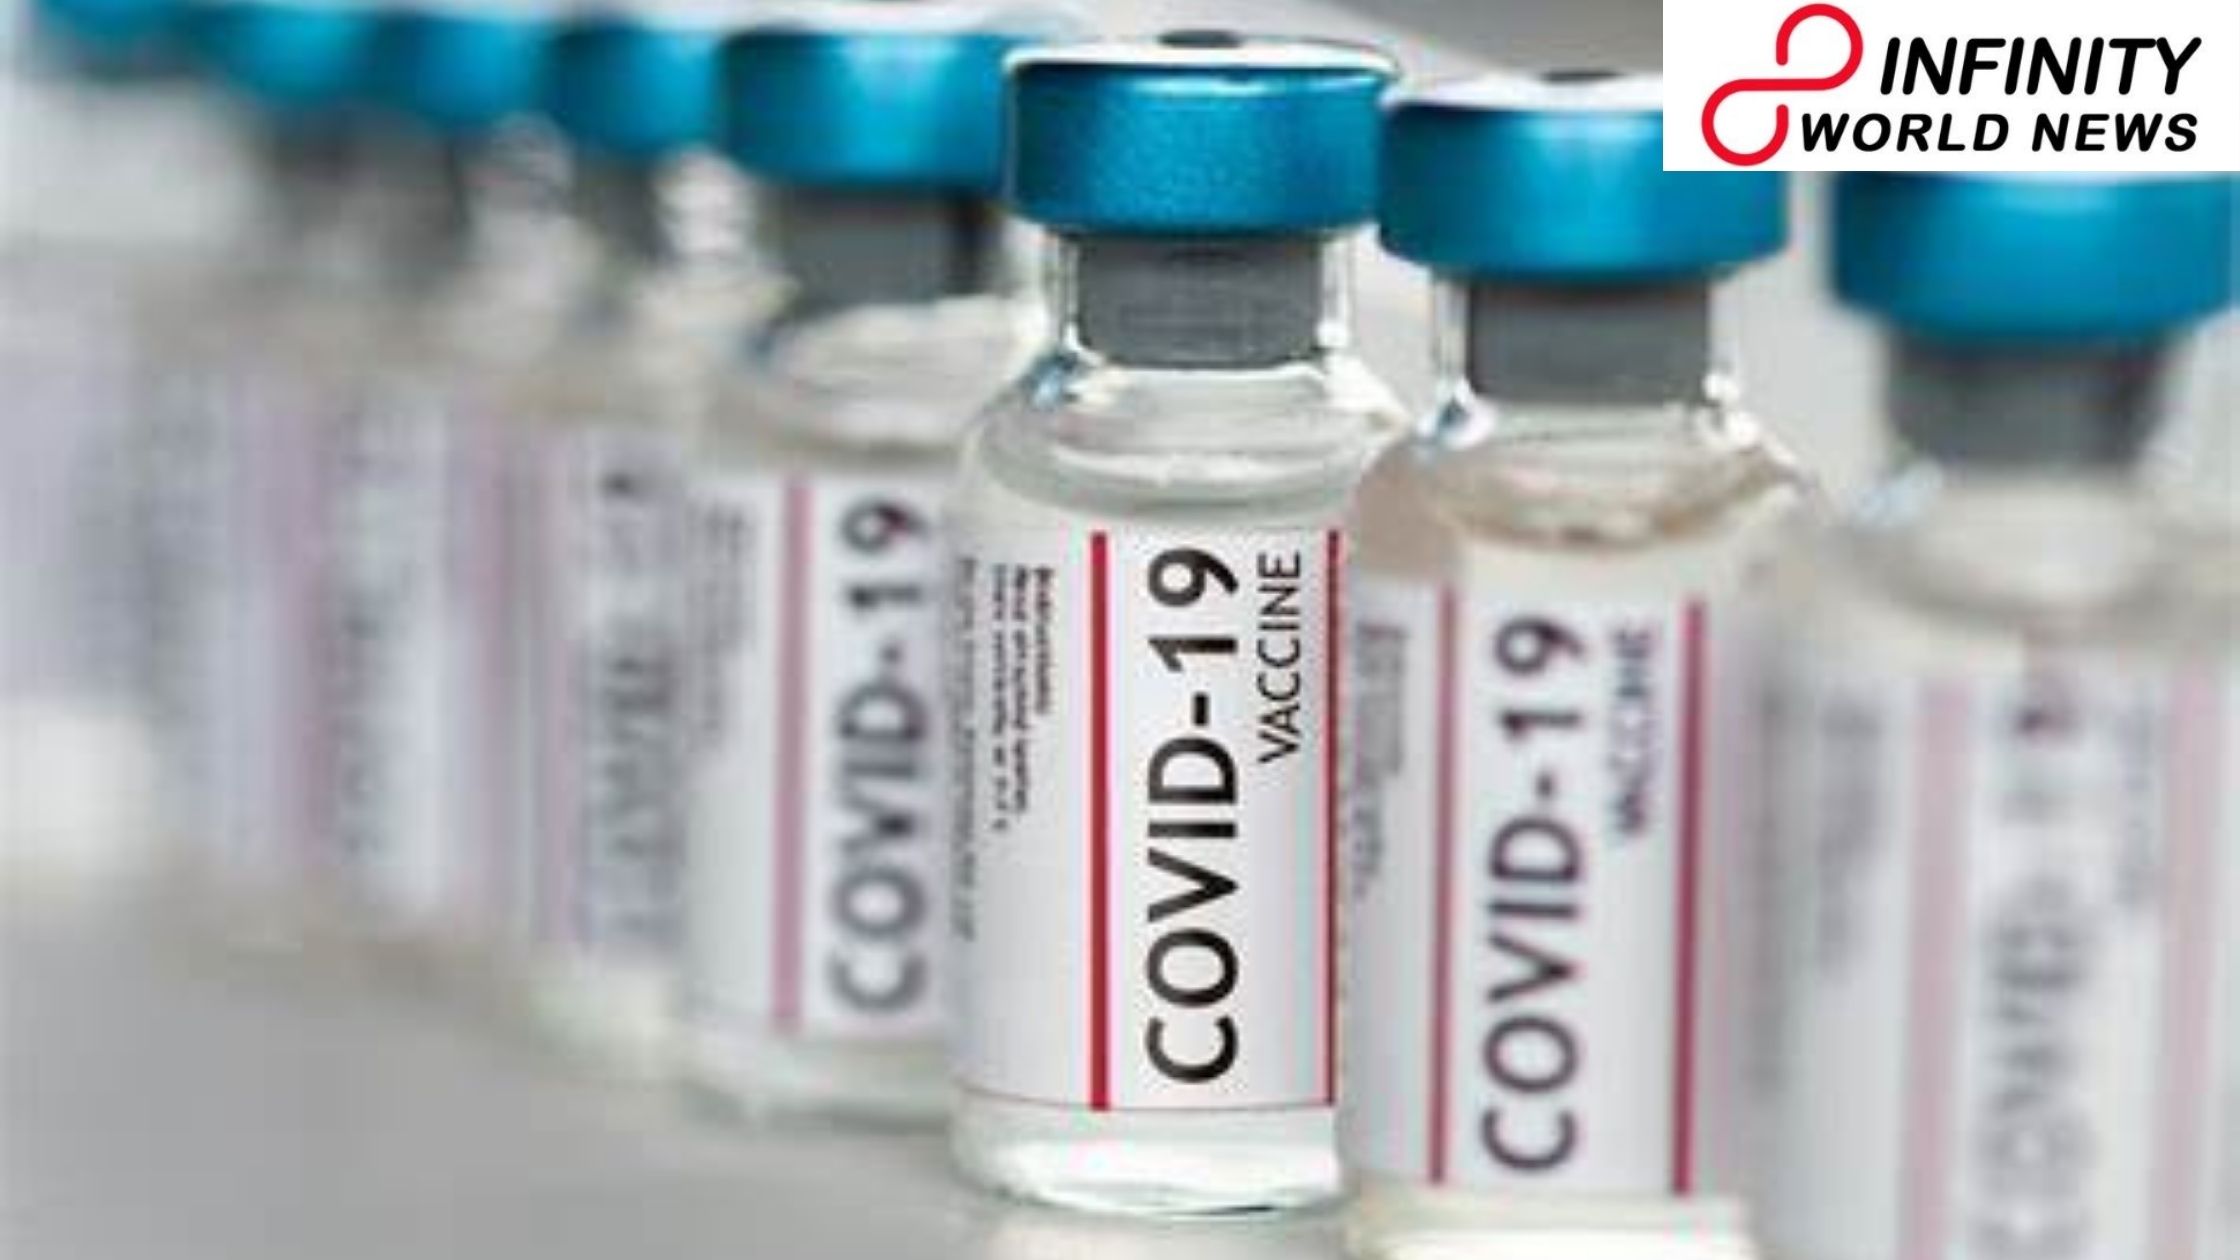 Do children need a different Covid-19 immunization?